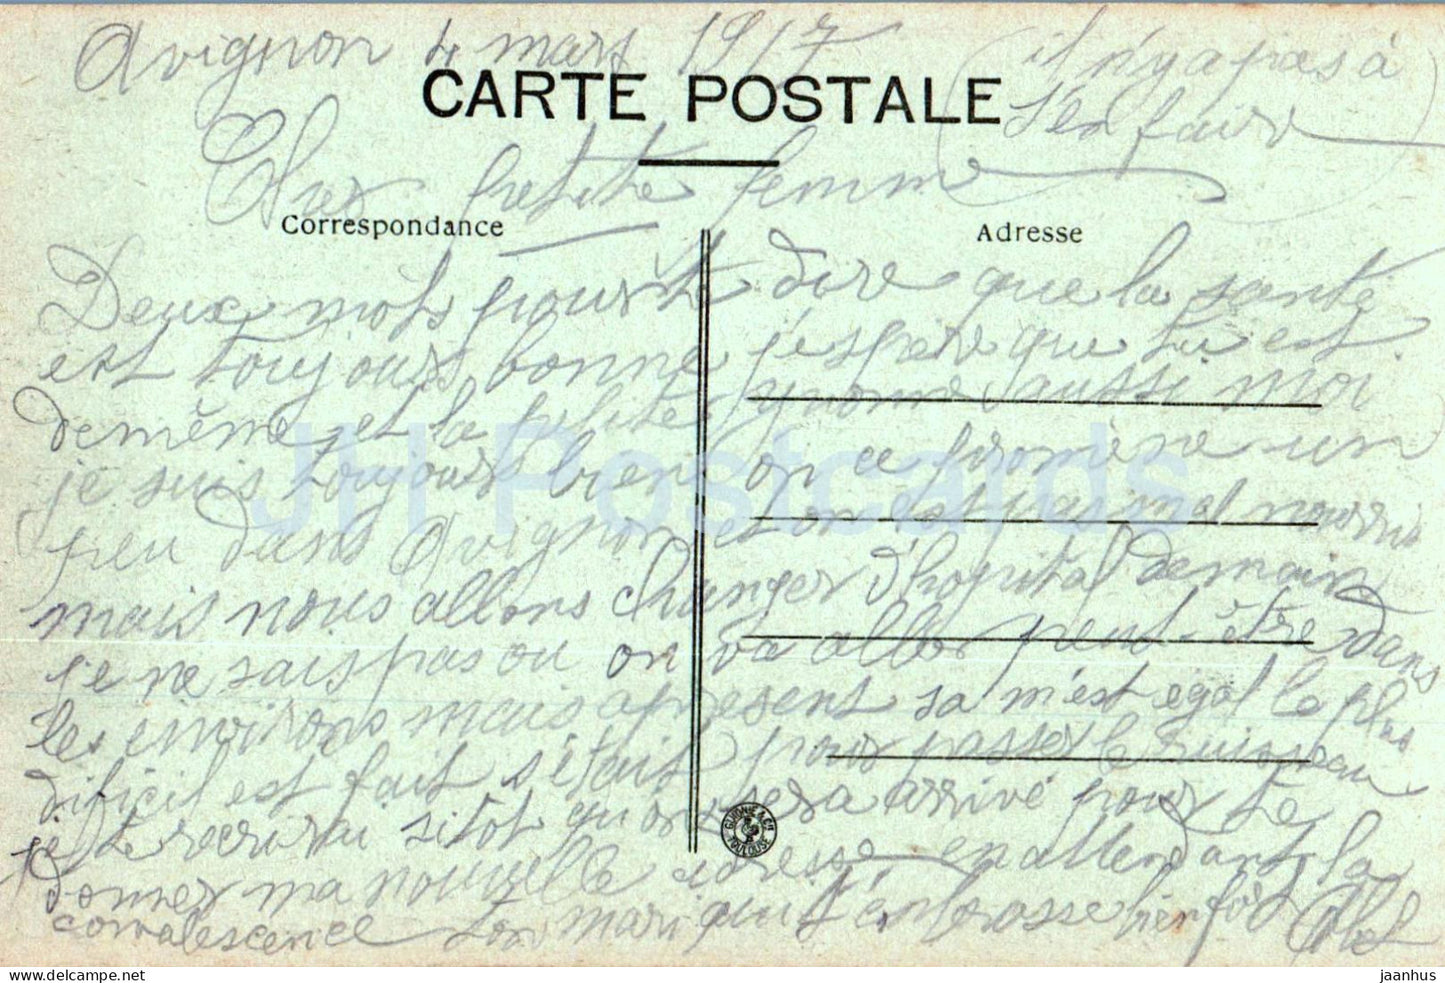 Avignon - Panorama du Palais des Papes - 21 - alte Postkarte - 1917 - Frankreich - gebraucht 